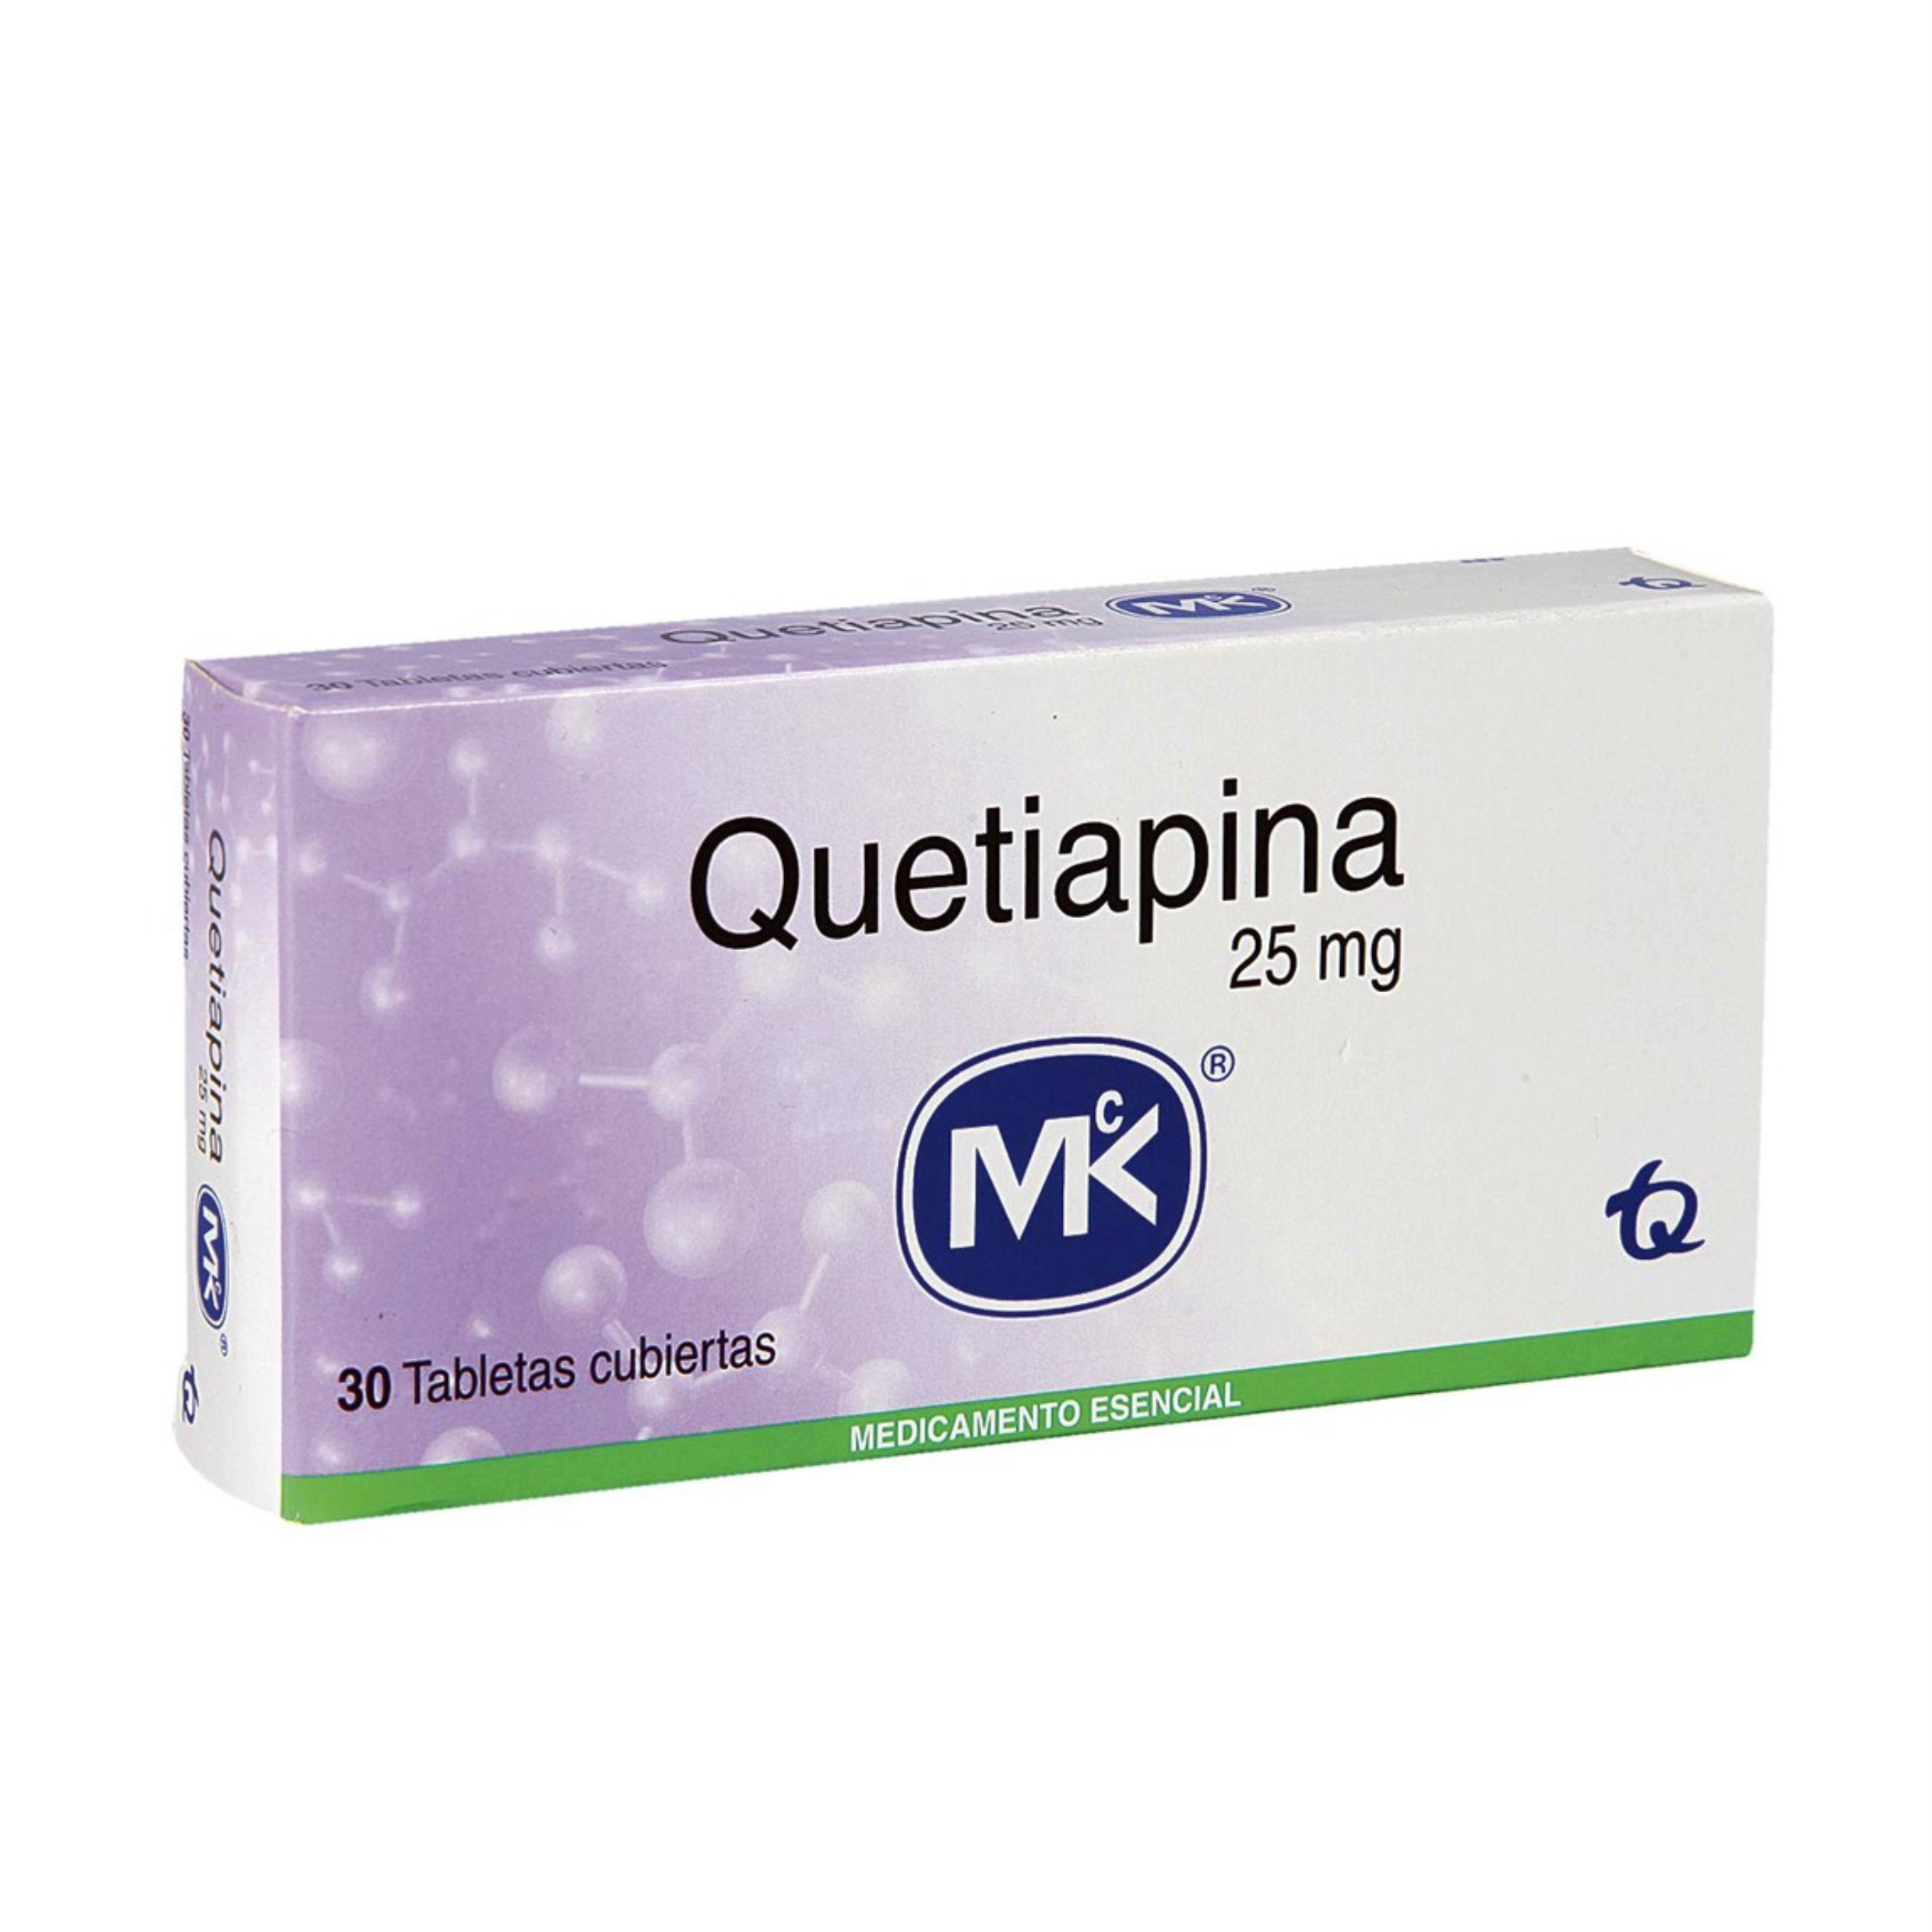 Quetiapina 25 mg caja x 30 Tabletas cubiertas